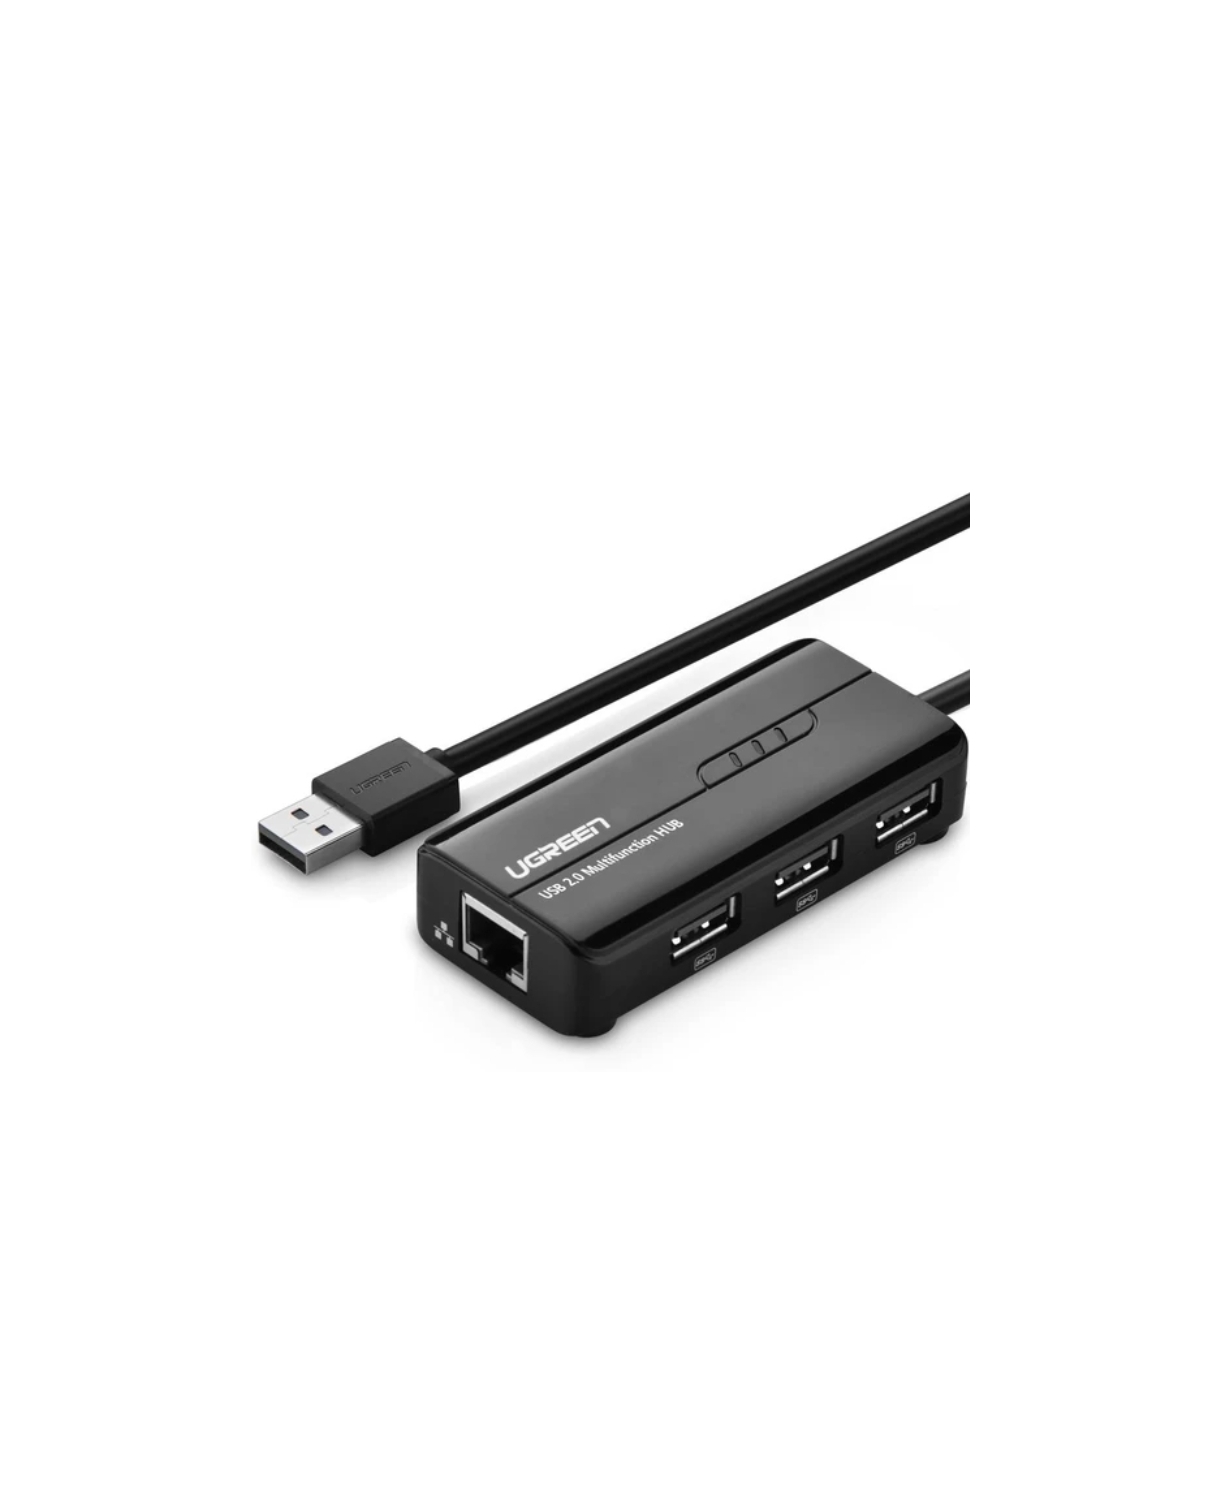 20264 - USB-A MALE TO ETHERNET AADPTOR + 3 PORTS USB HUB